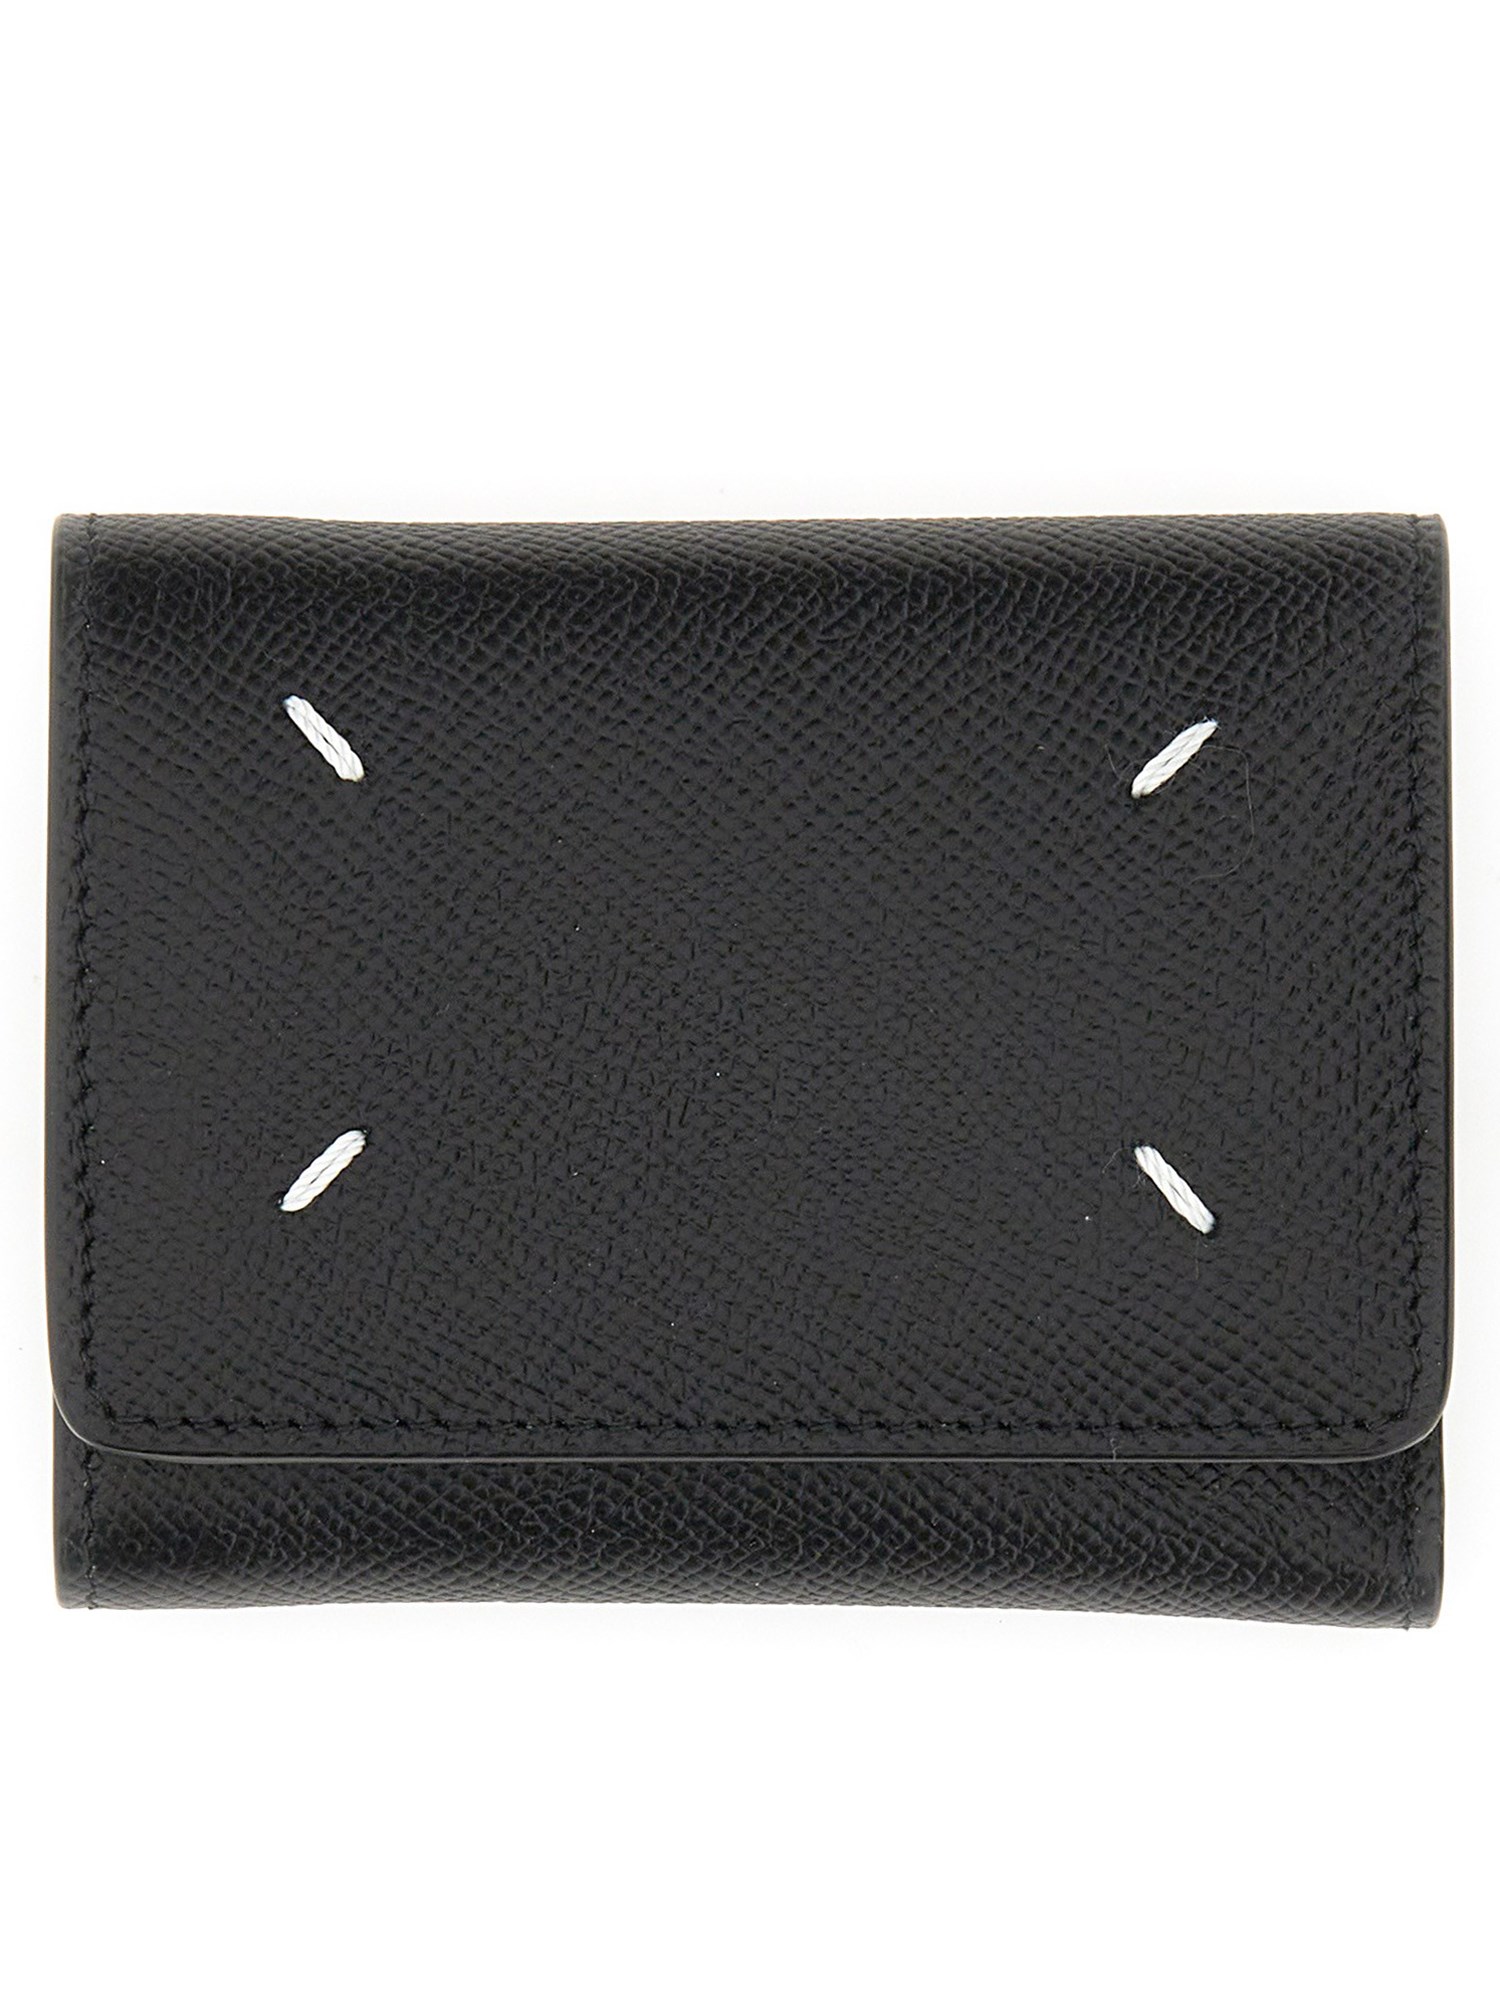 maison margiela wallet with four seams